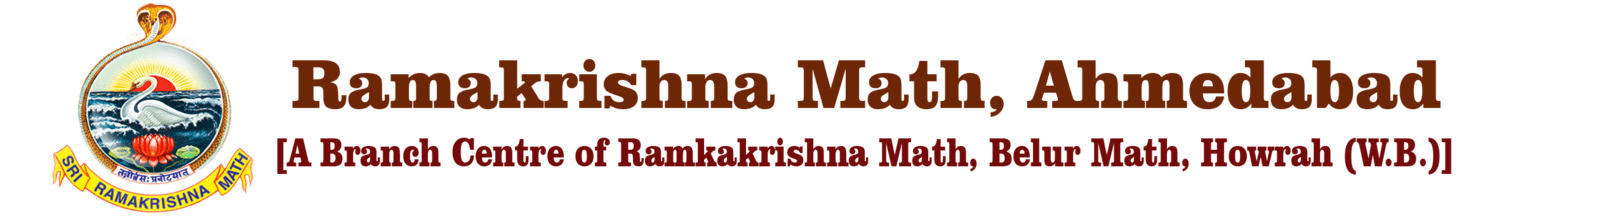 Ramakrishna Math, Ahmedabad